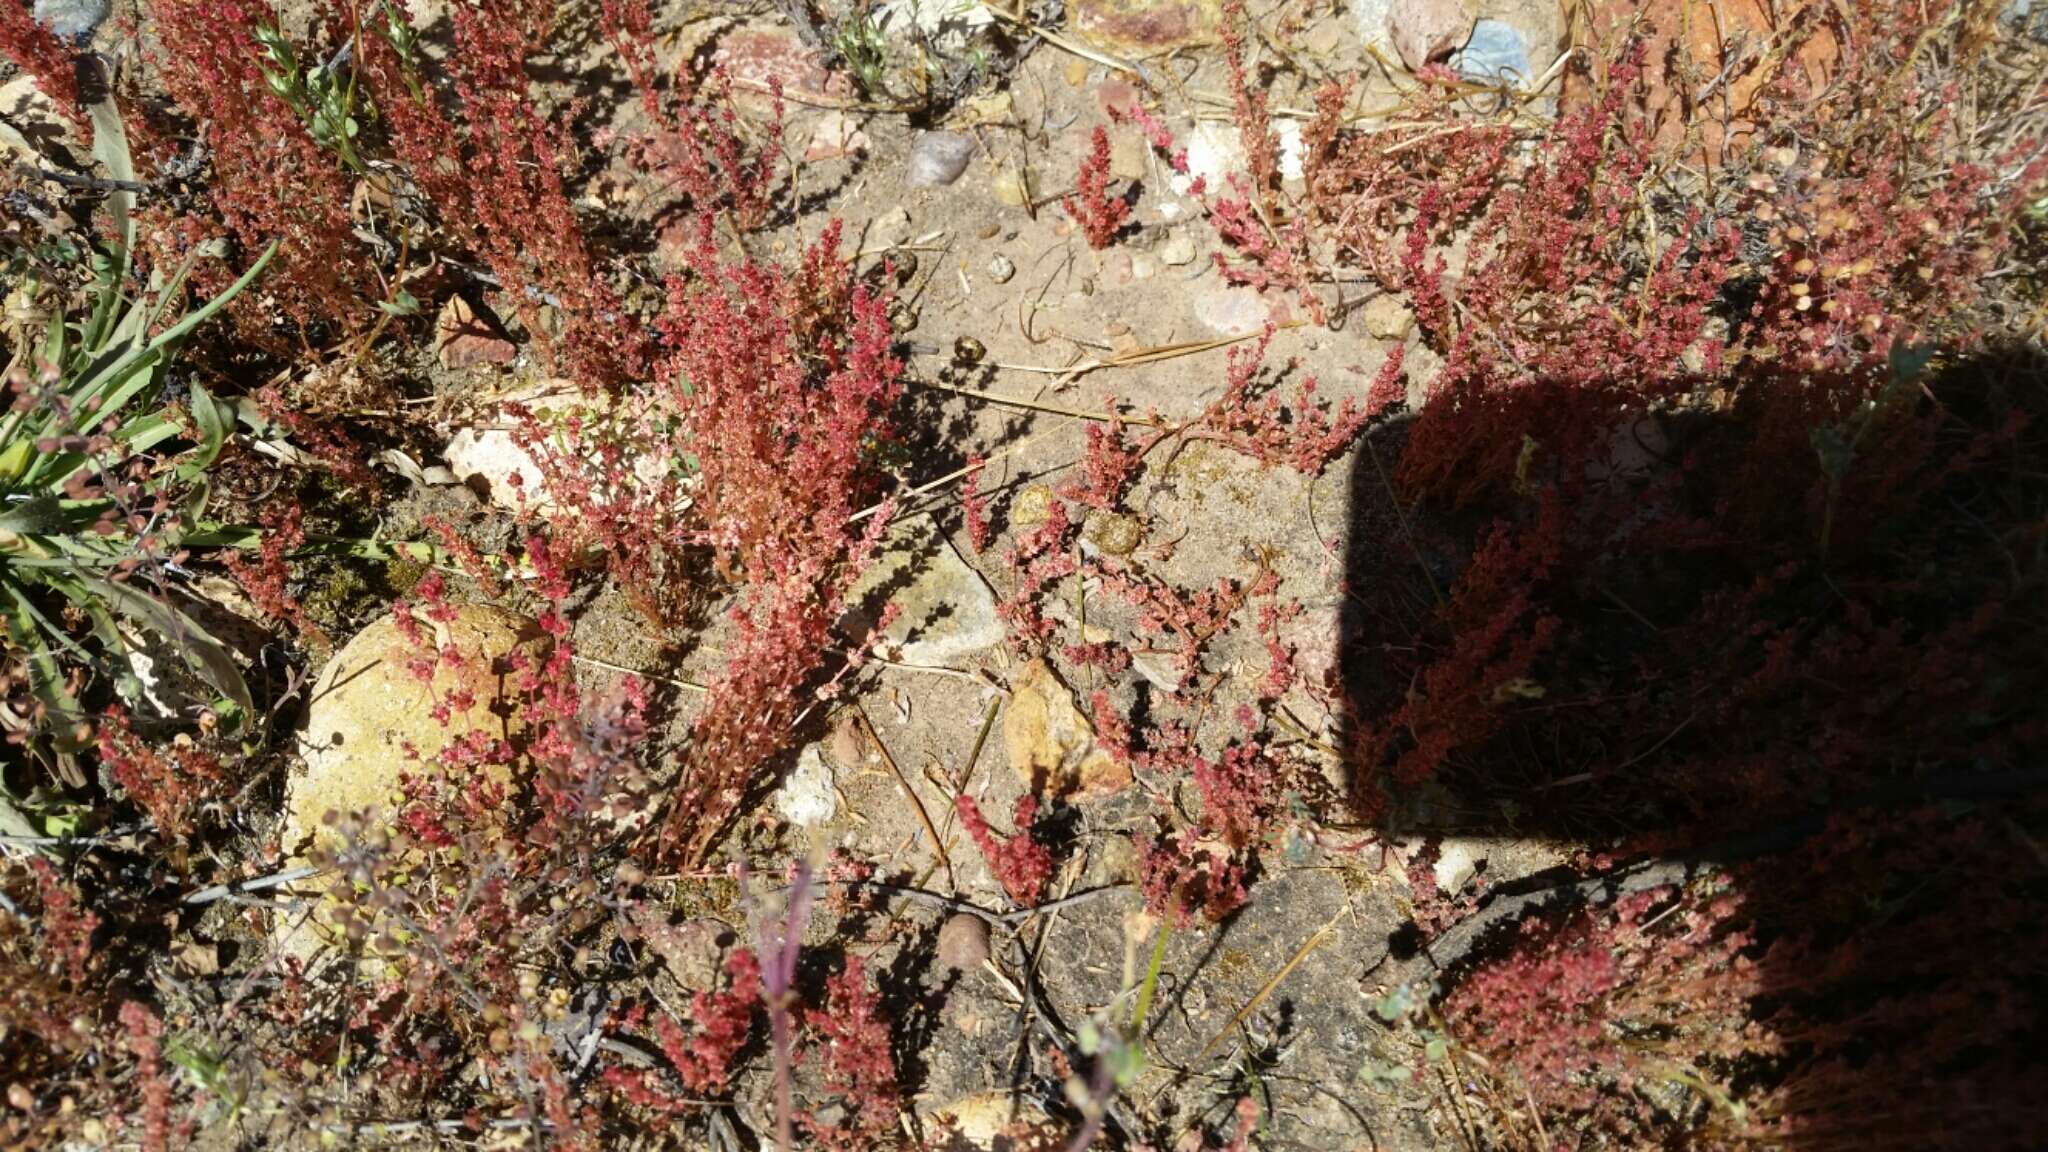 Image of sand pygmyweed